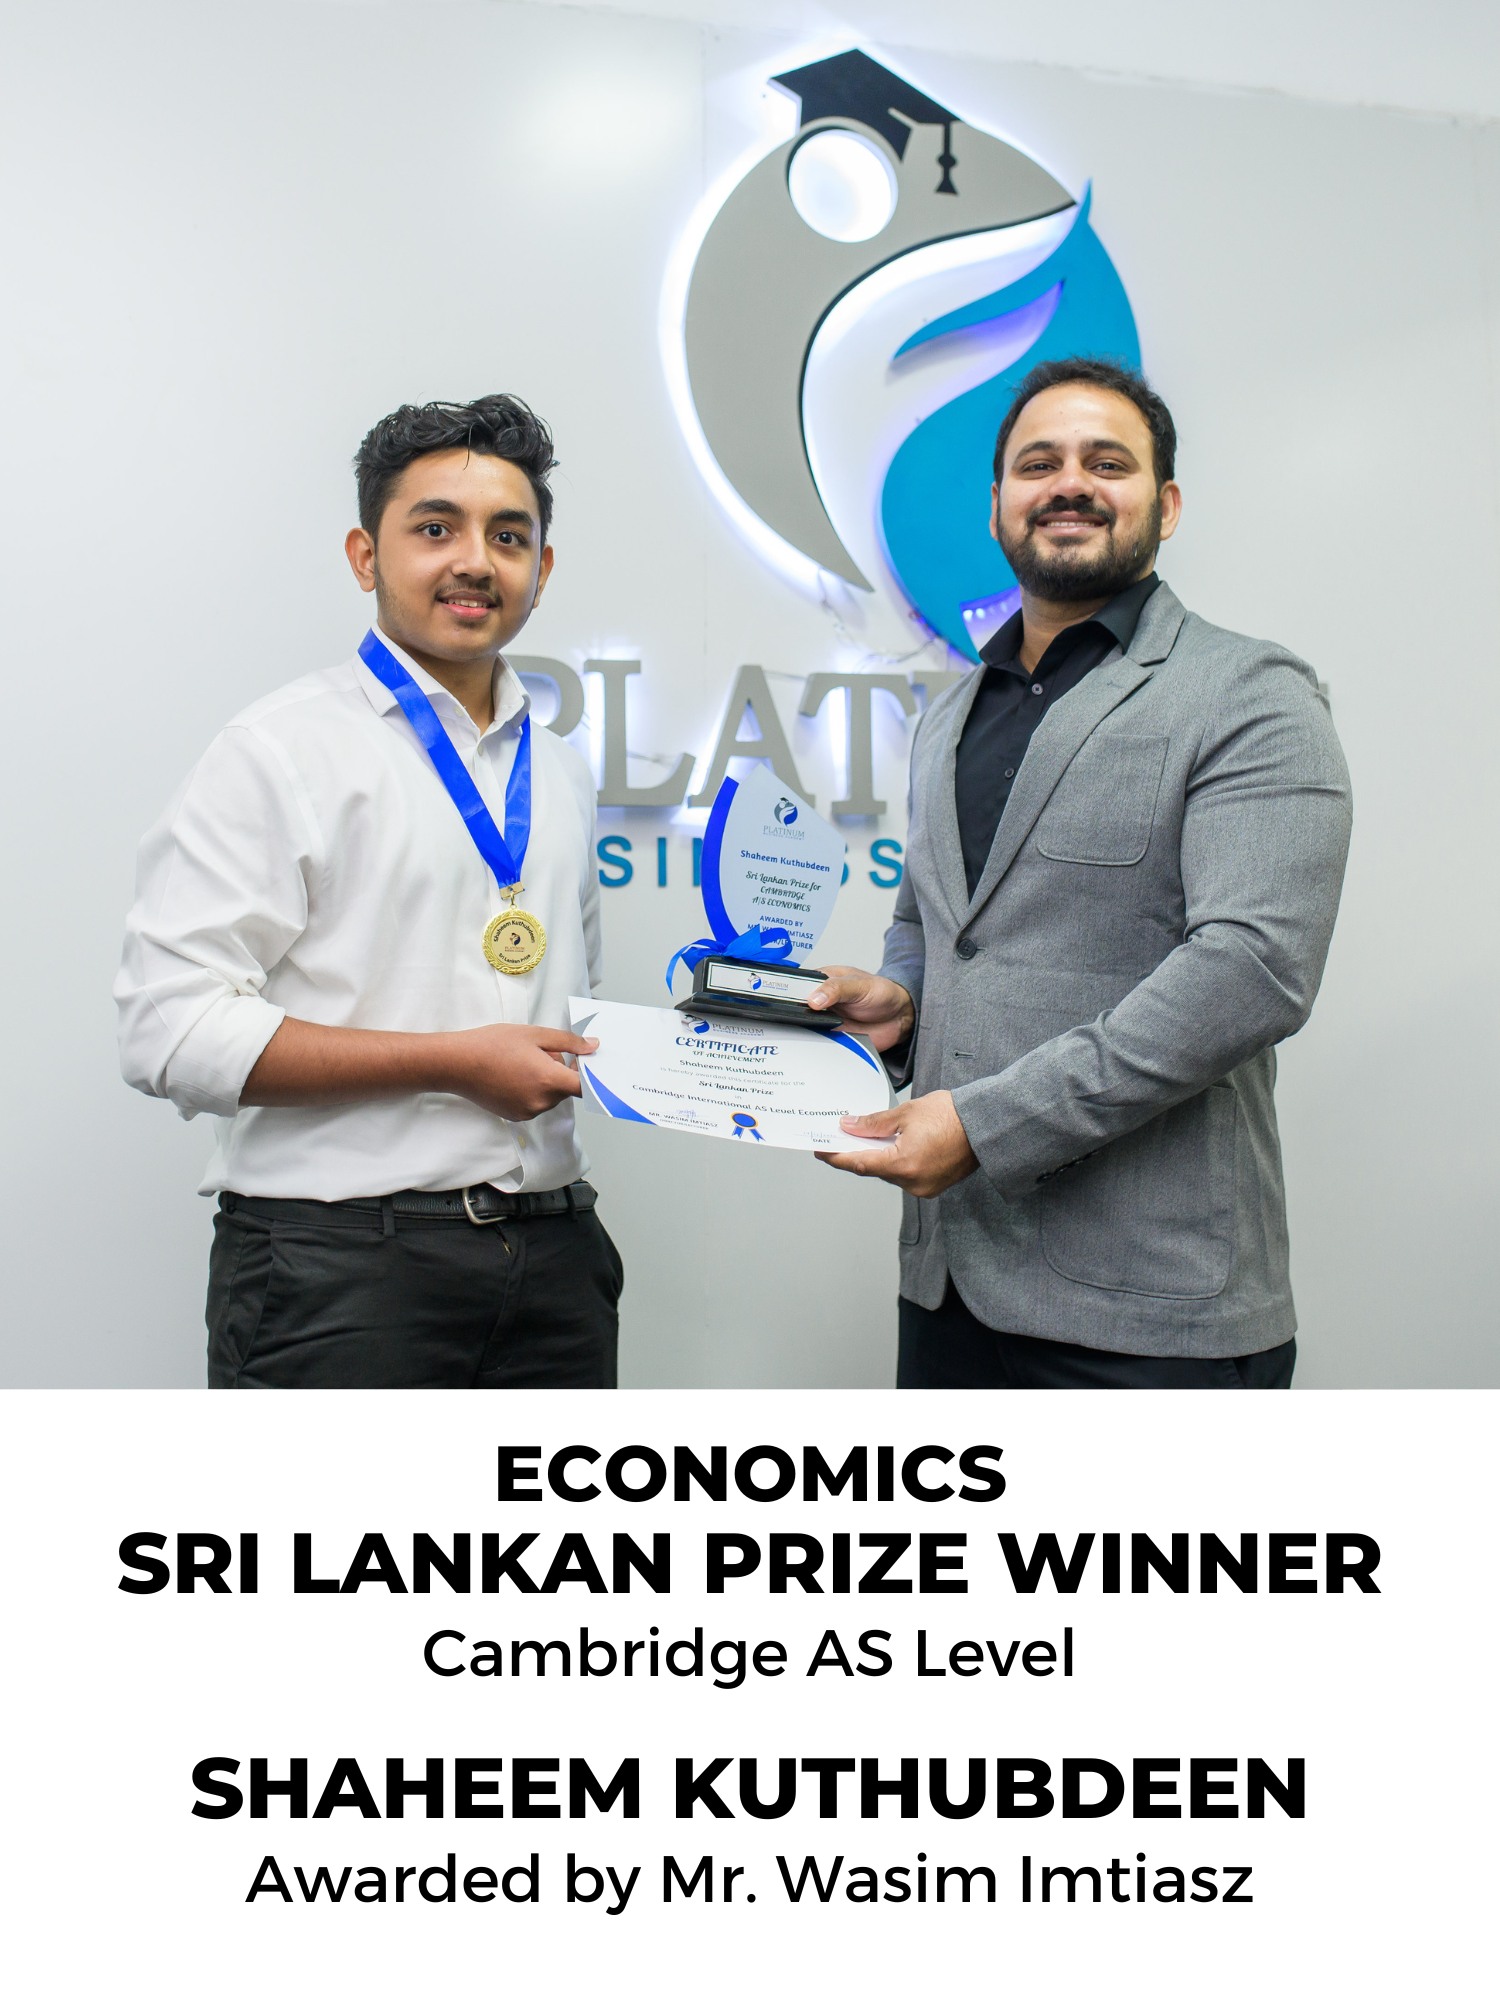 Cambridge AS Level Accounting Sri Lankan Prize Winner: Shaheem Kuthubdeen
Lecturer: Mr. Wasim Imtiasz